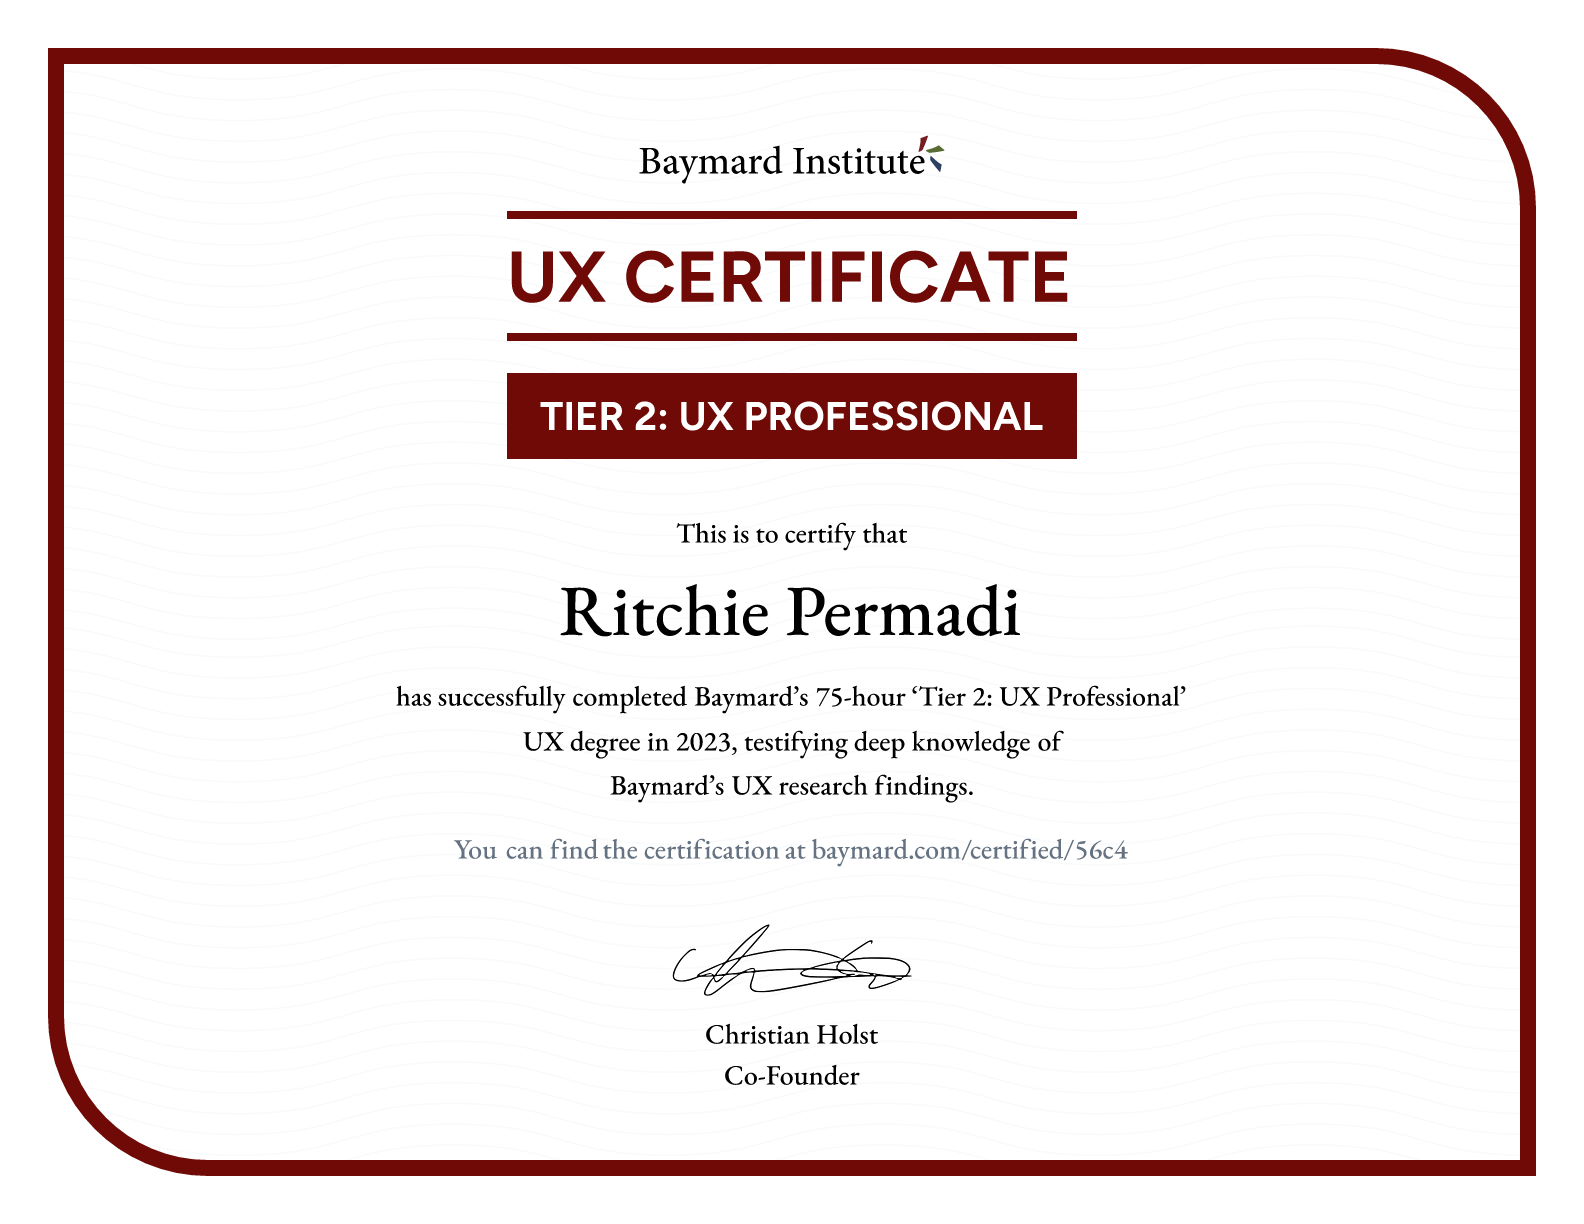 Ritchie Permadi’s certificate